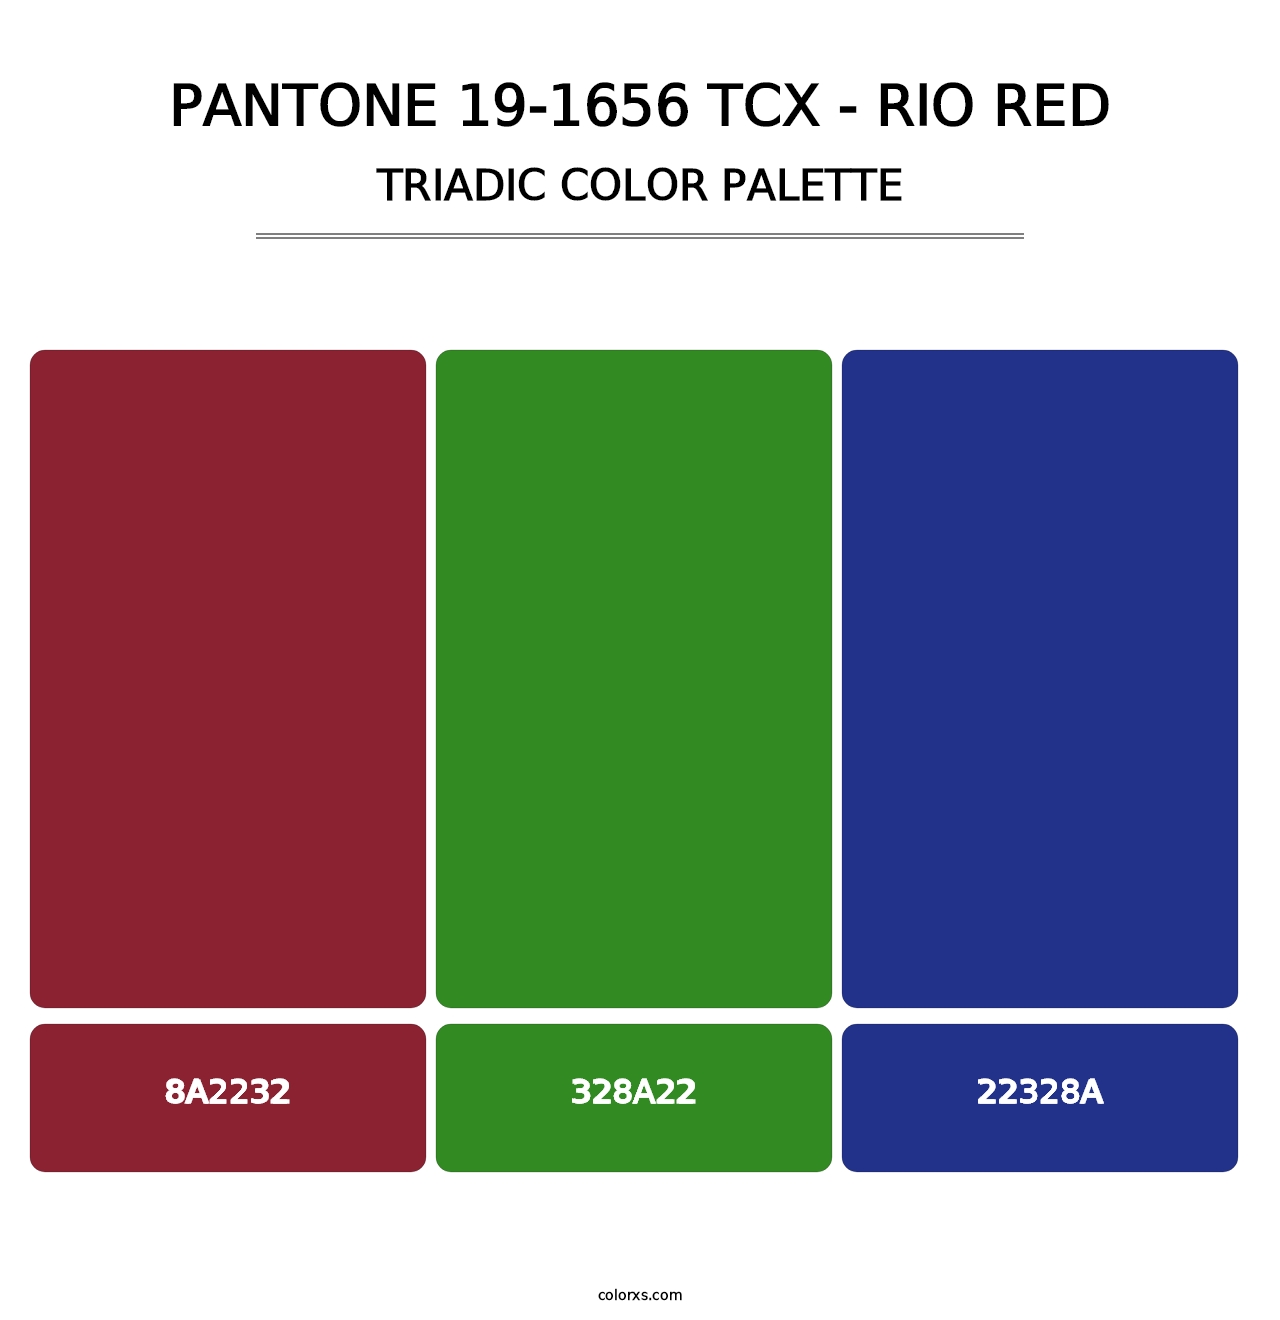 PANTONE 19-1656 TCX - Rio Red - Triadic Color Palette